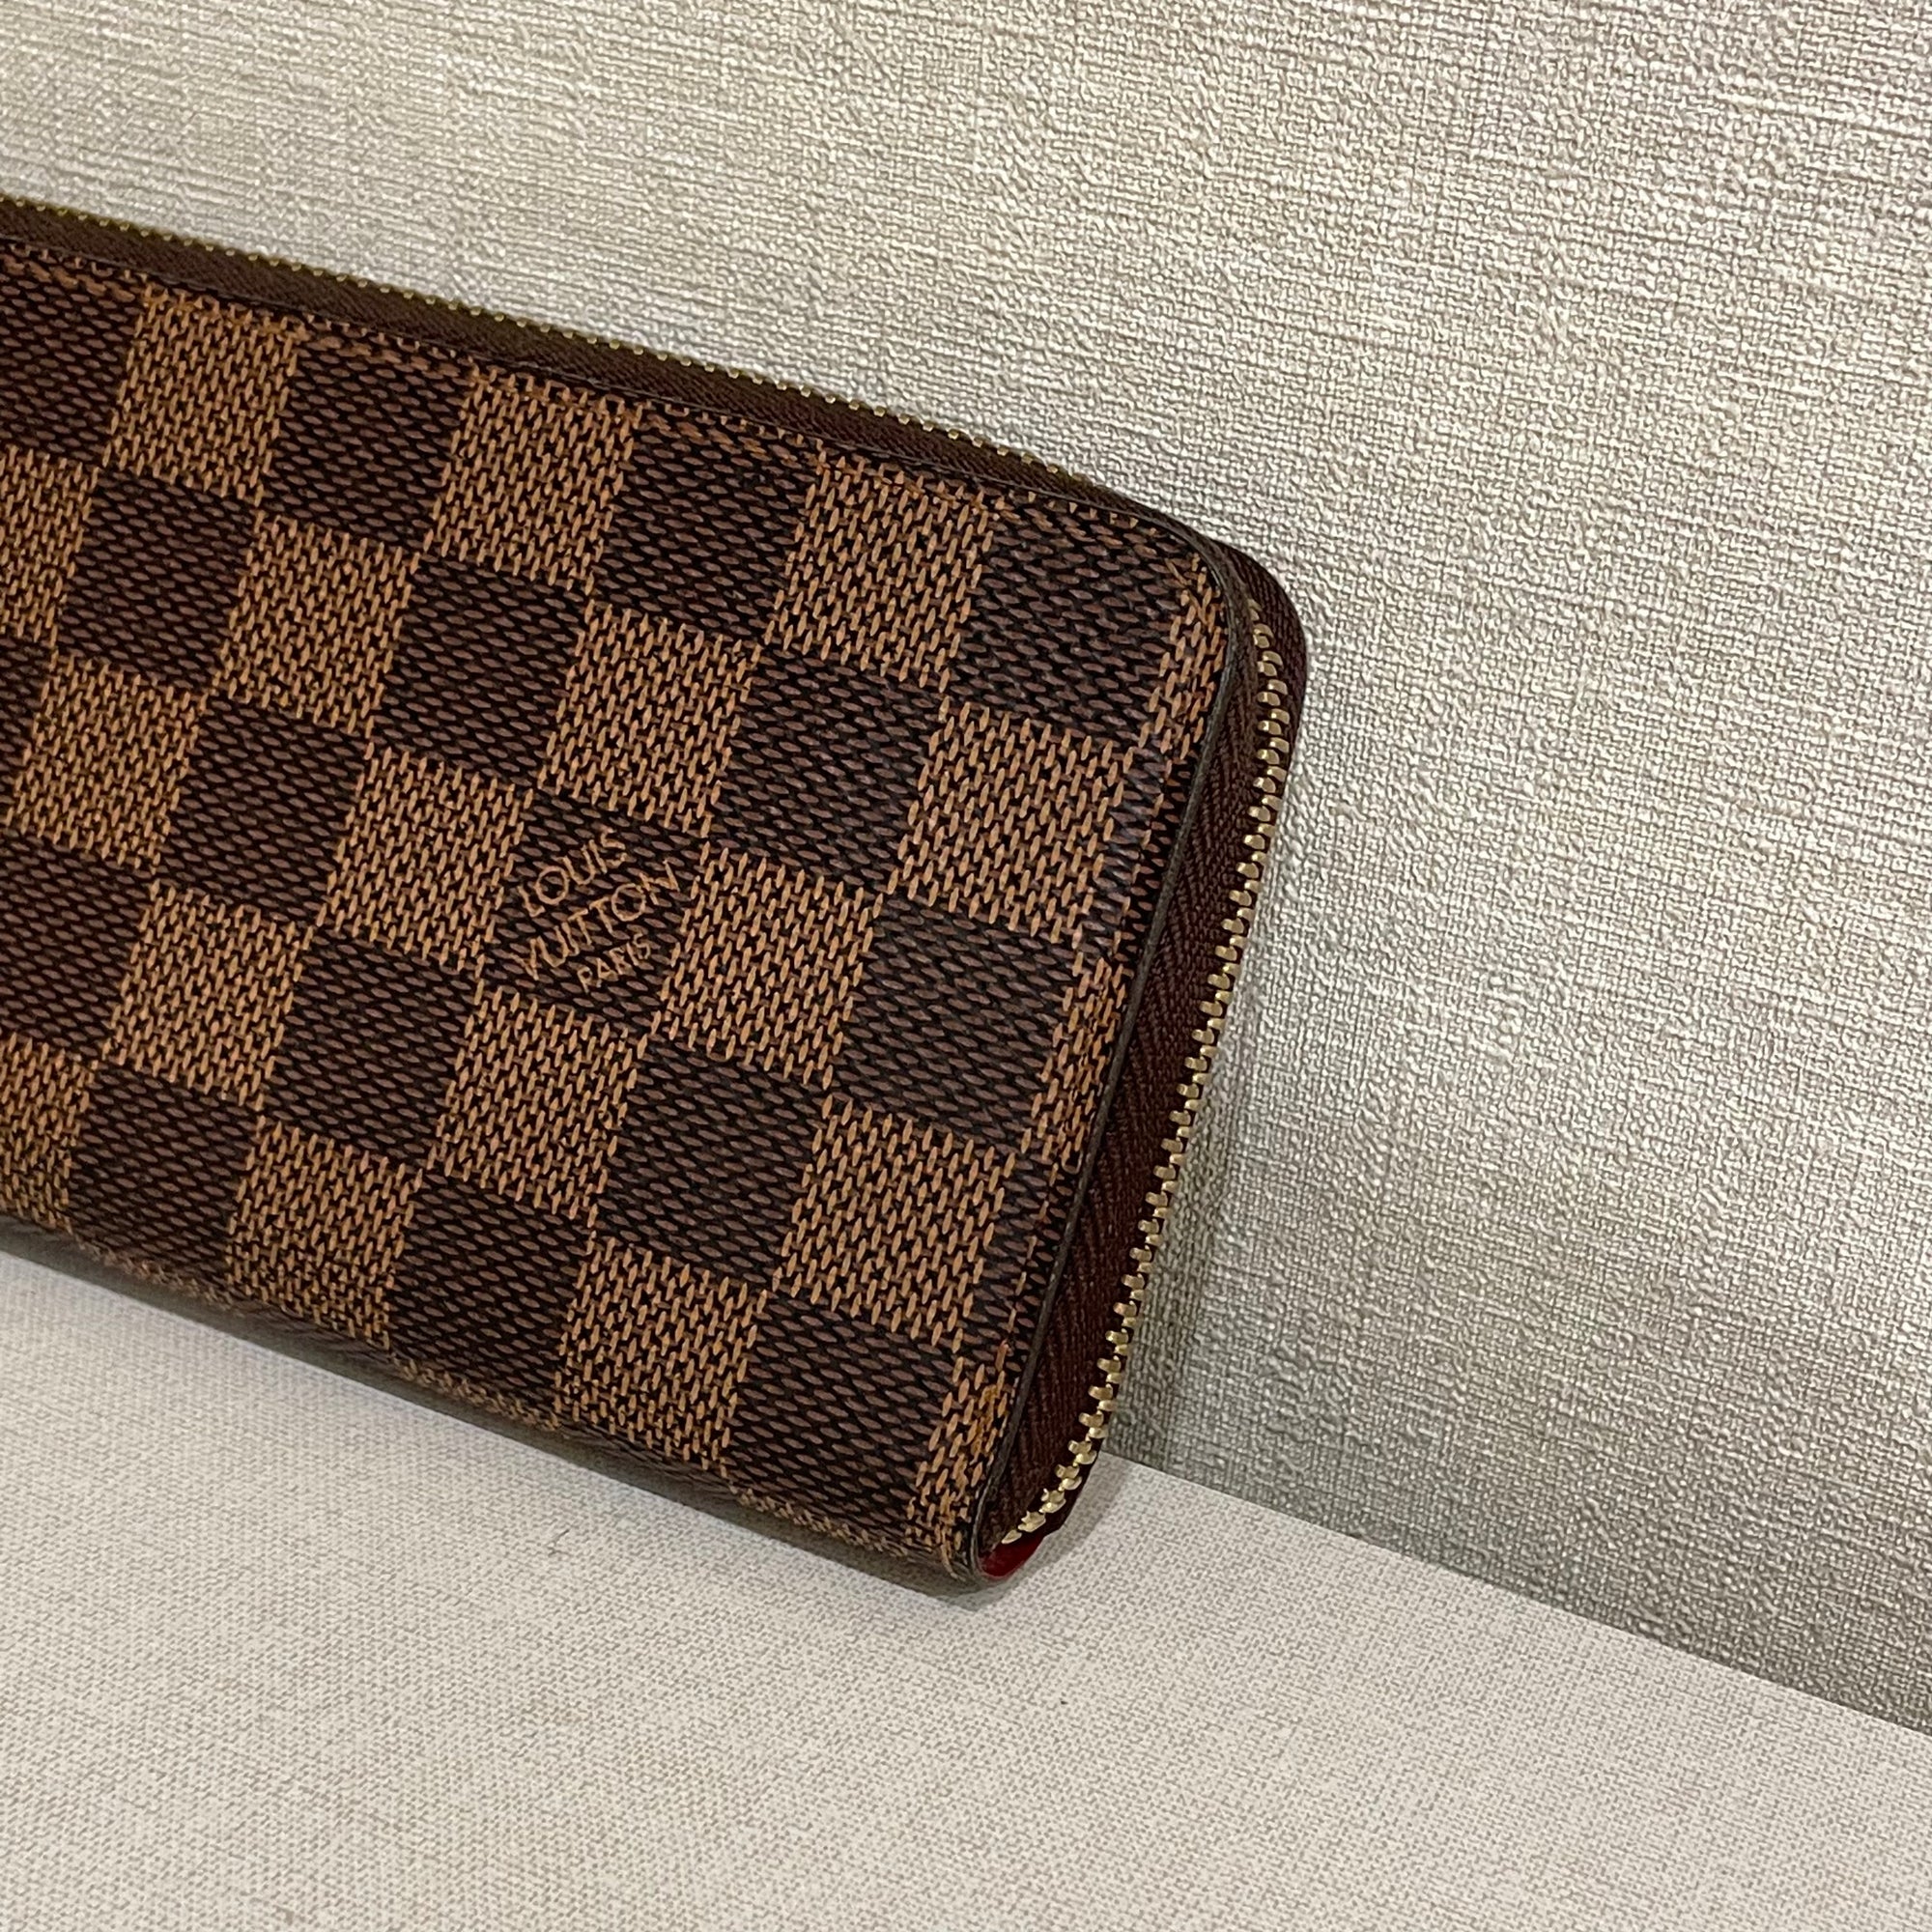 Shop Louis Vuitton Clémence wallet (N60534, N41626) by Sincerity_m639